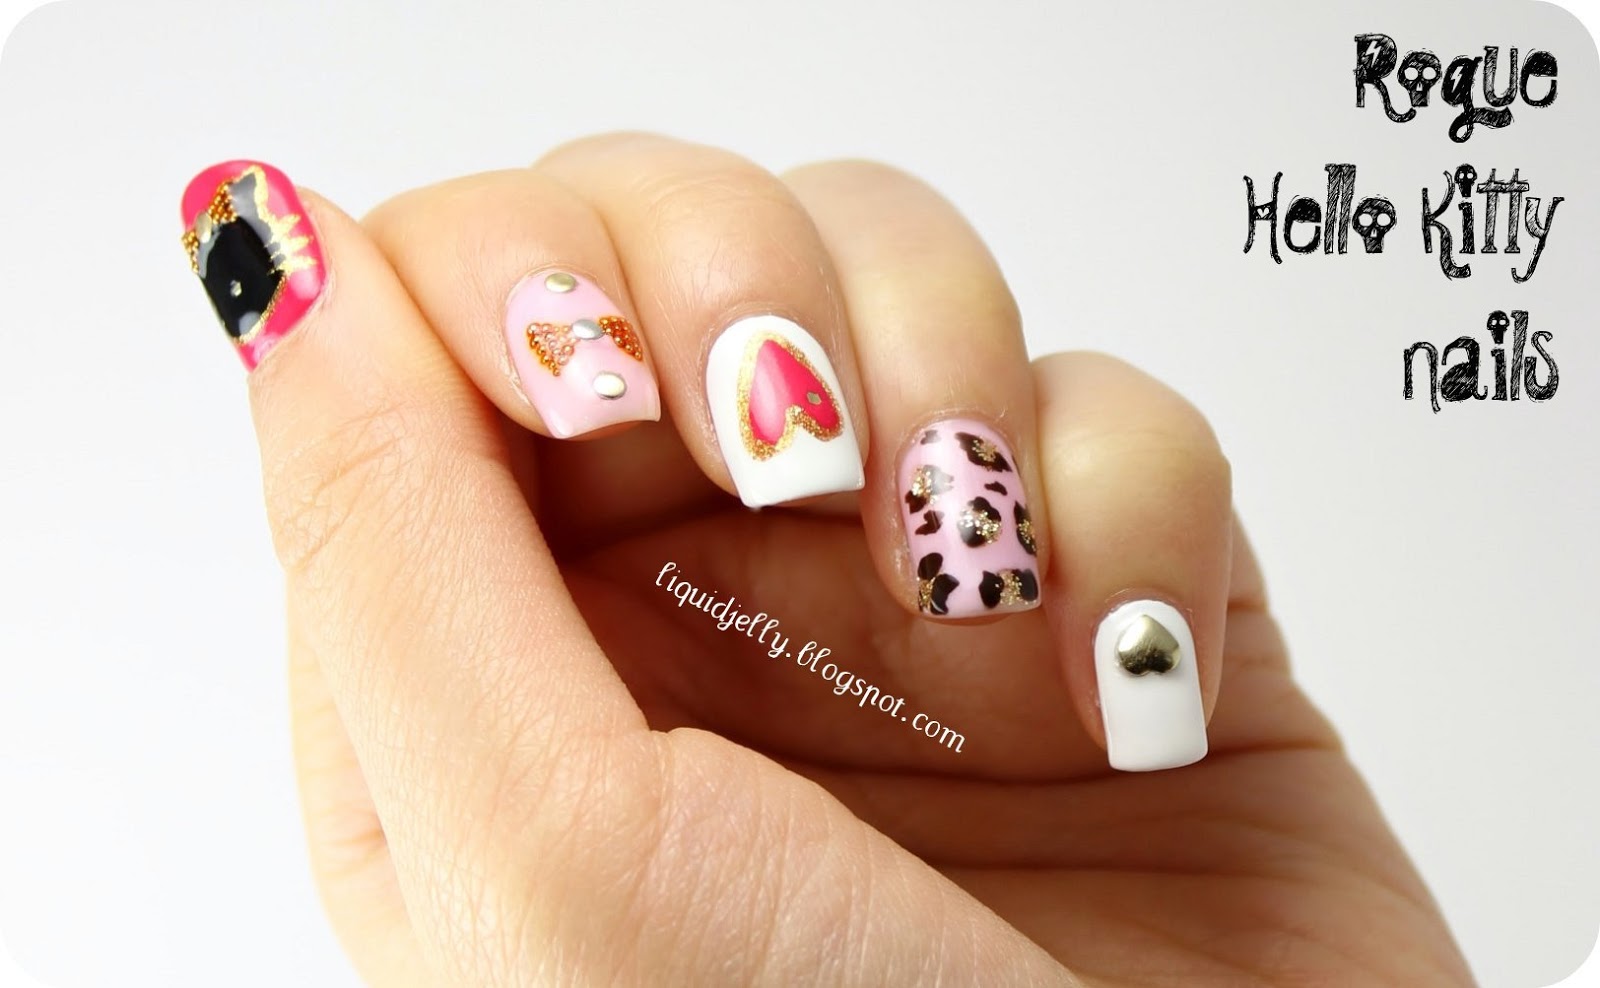 Hello Kitty Nail Art Designs - wide 8